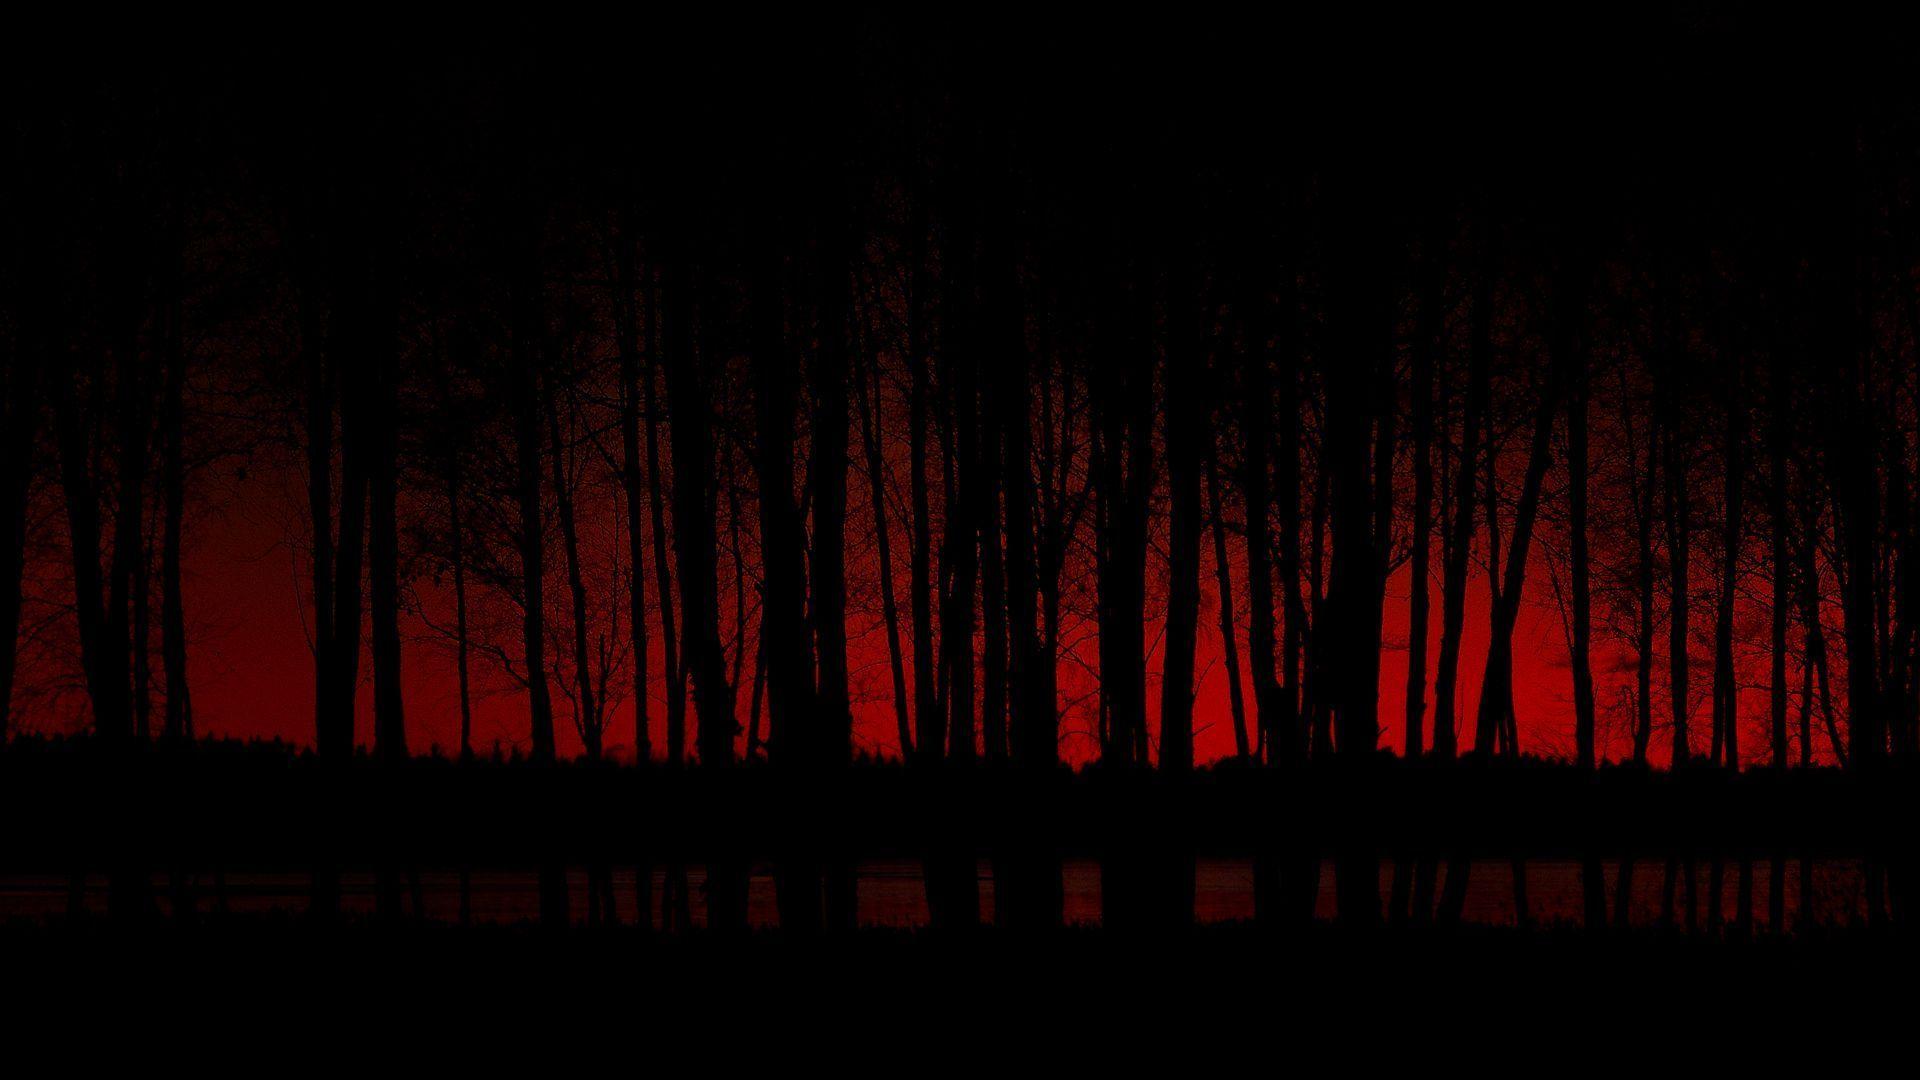 Dark Forest 31 392279 High Definition Wallpapers